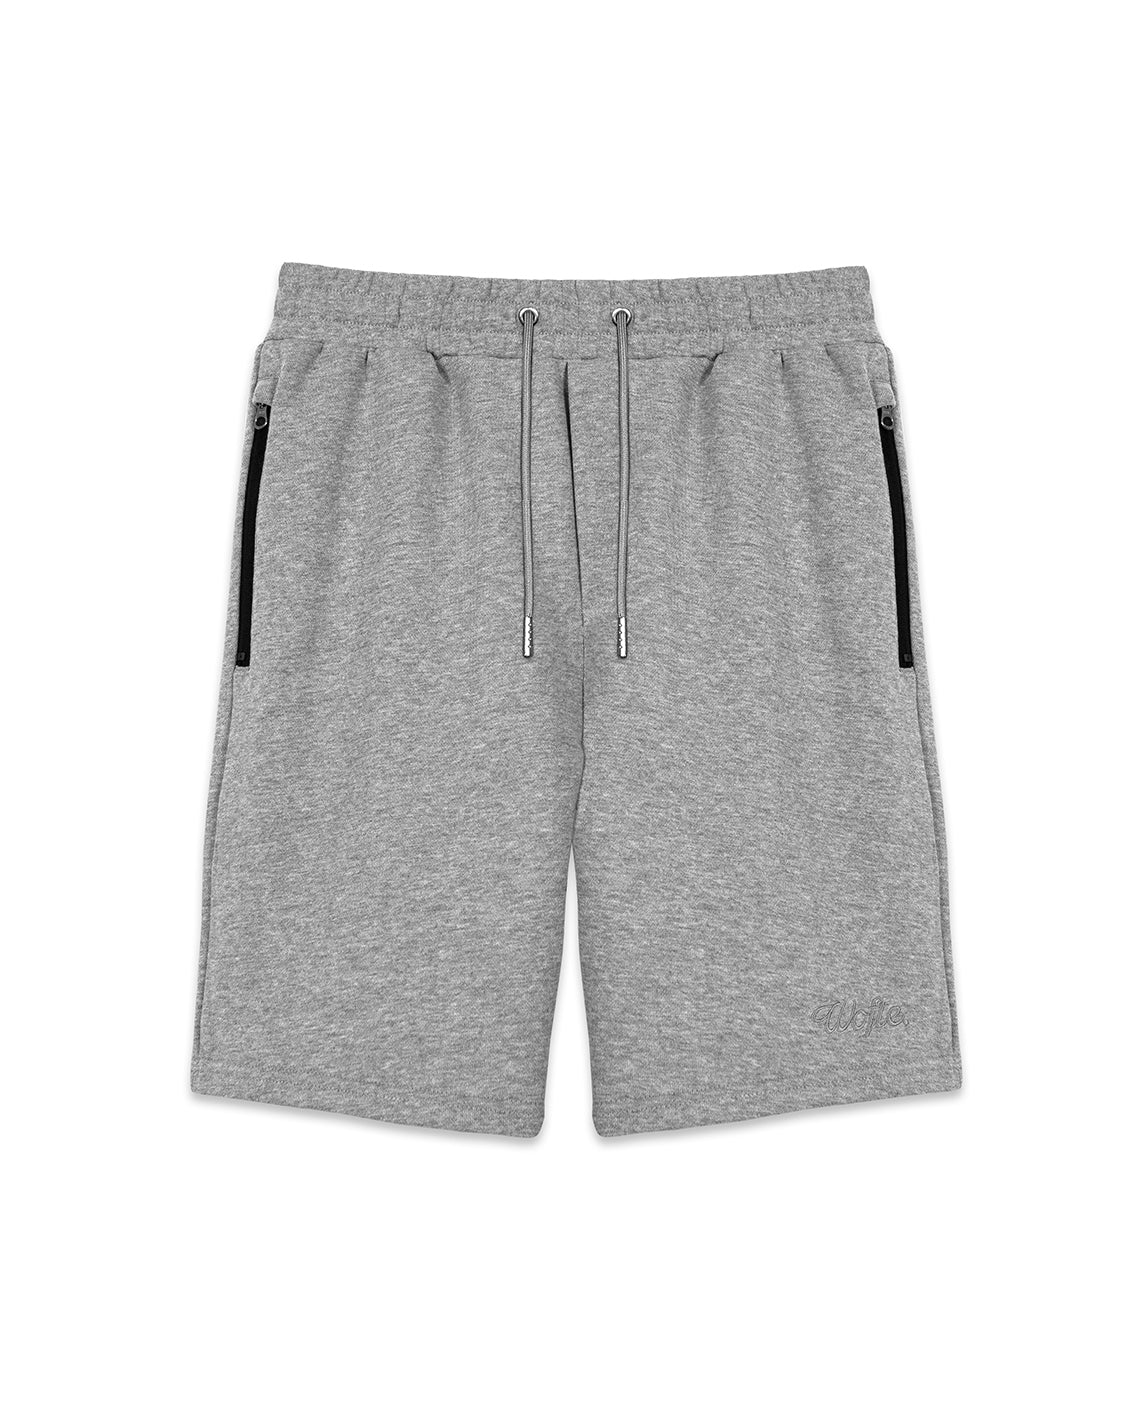 staple grey shorts